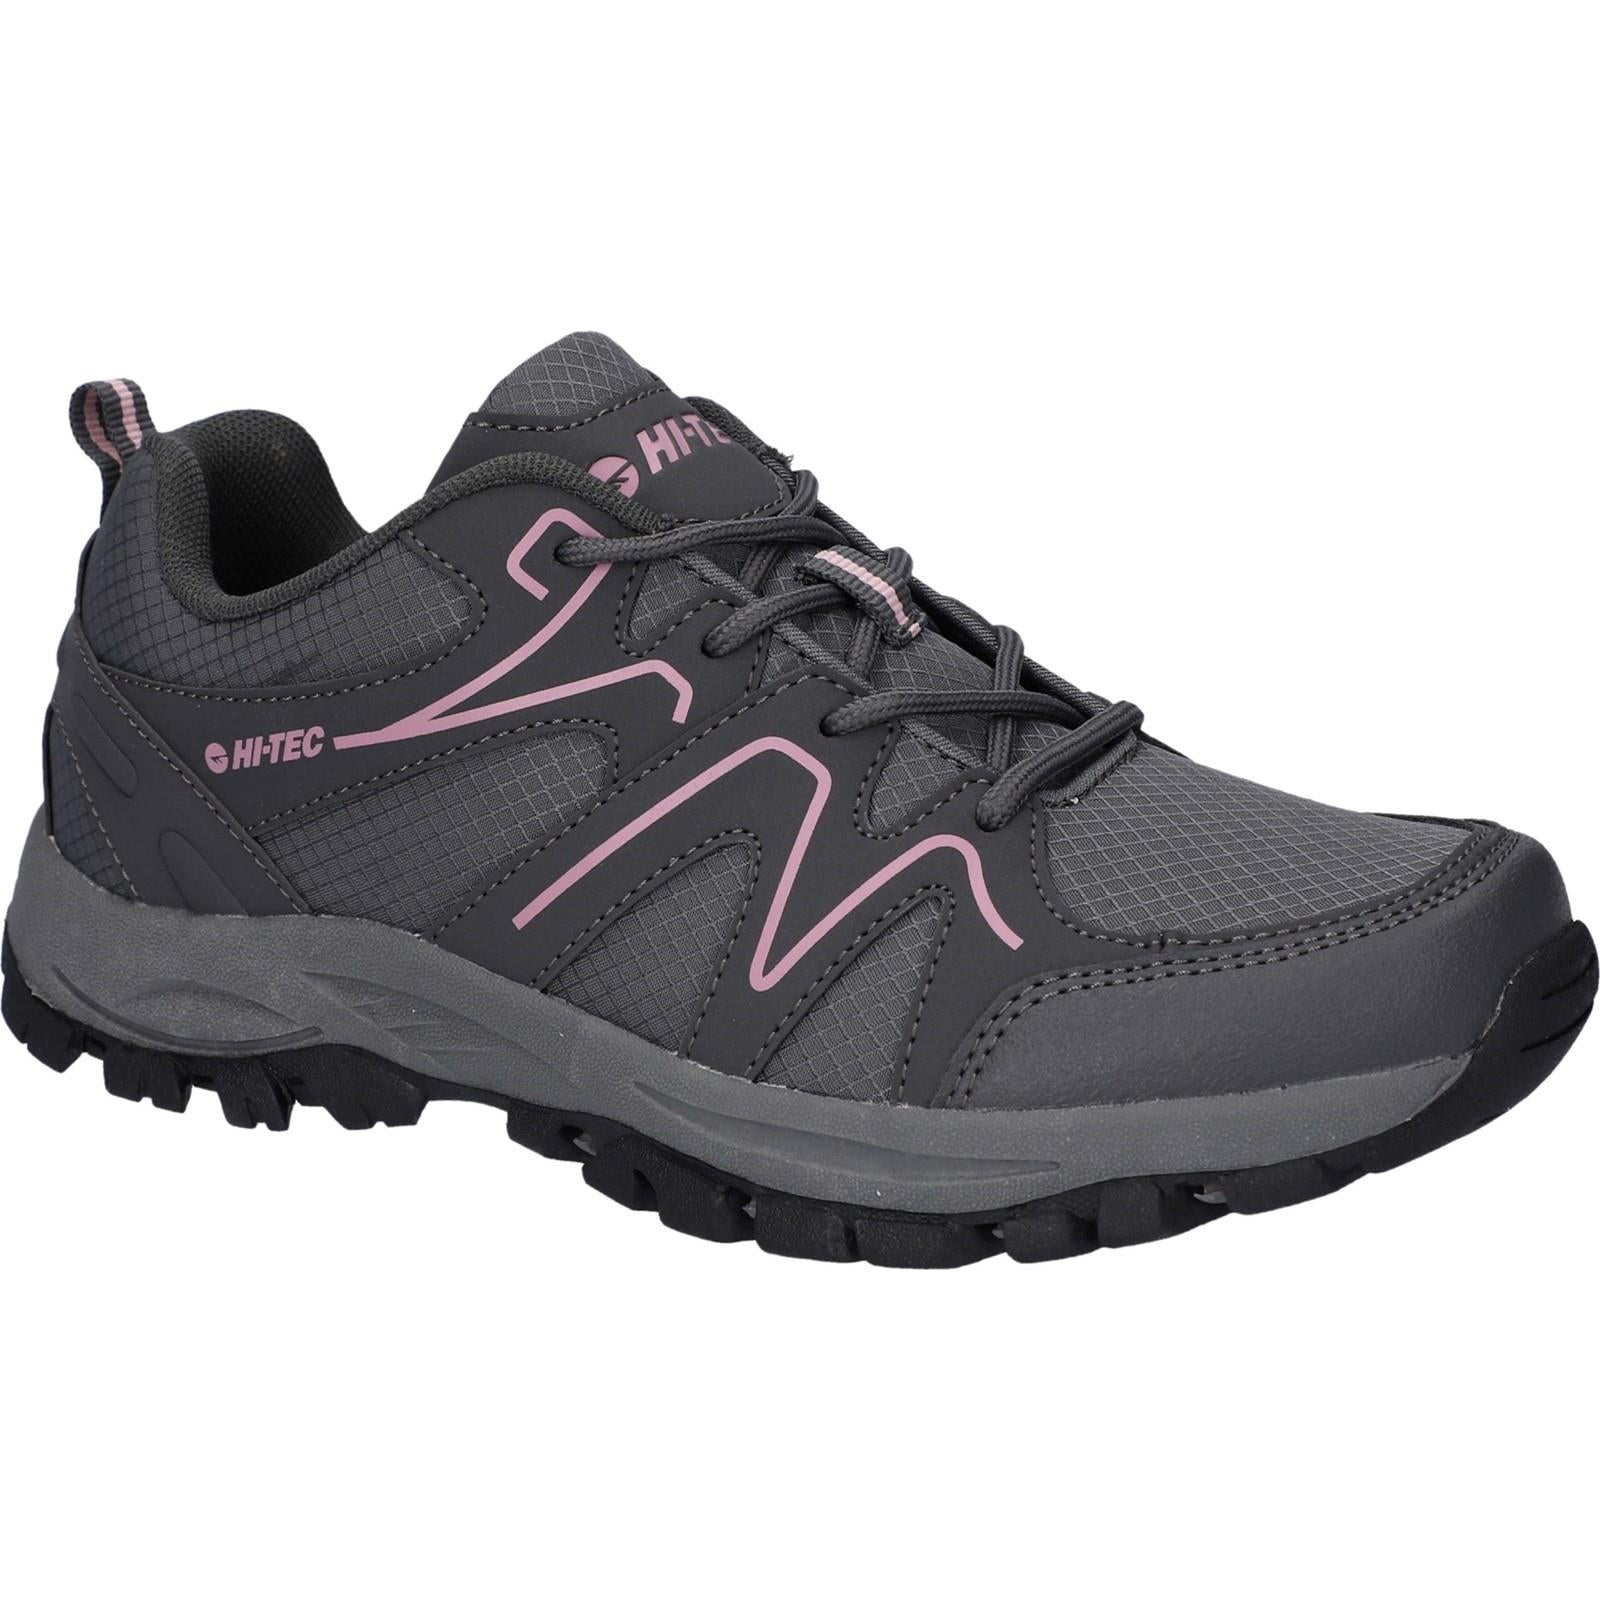 Hi-Tec Maine steel grey/charcoal women's walking hiking shoe